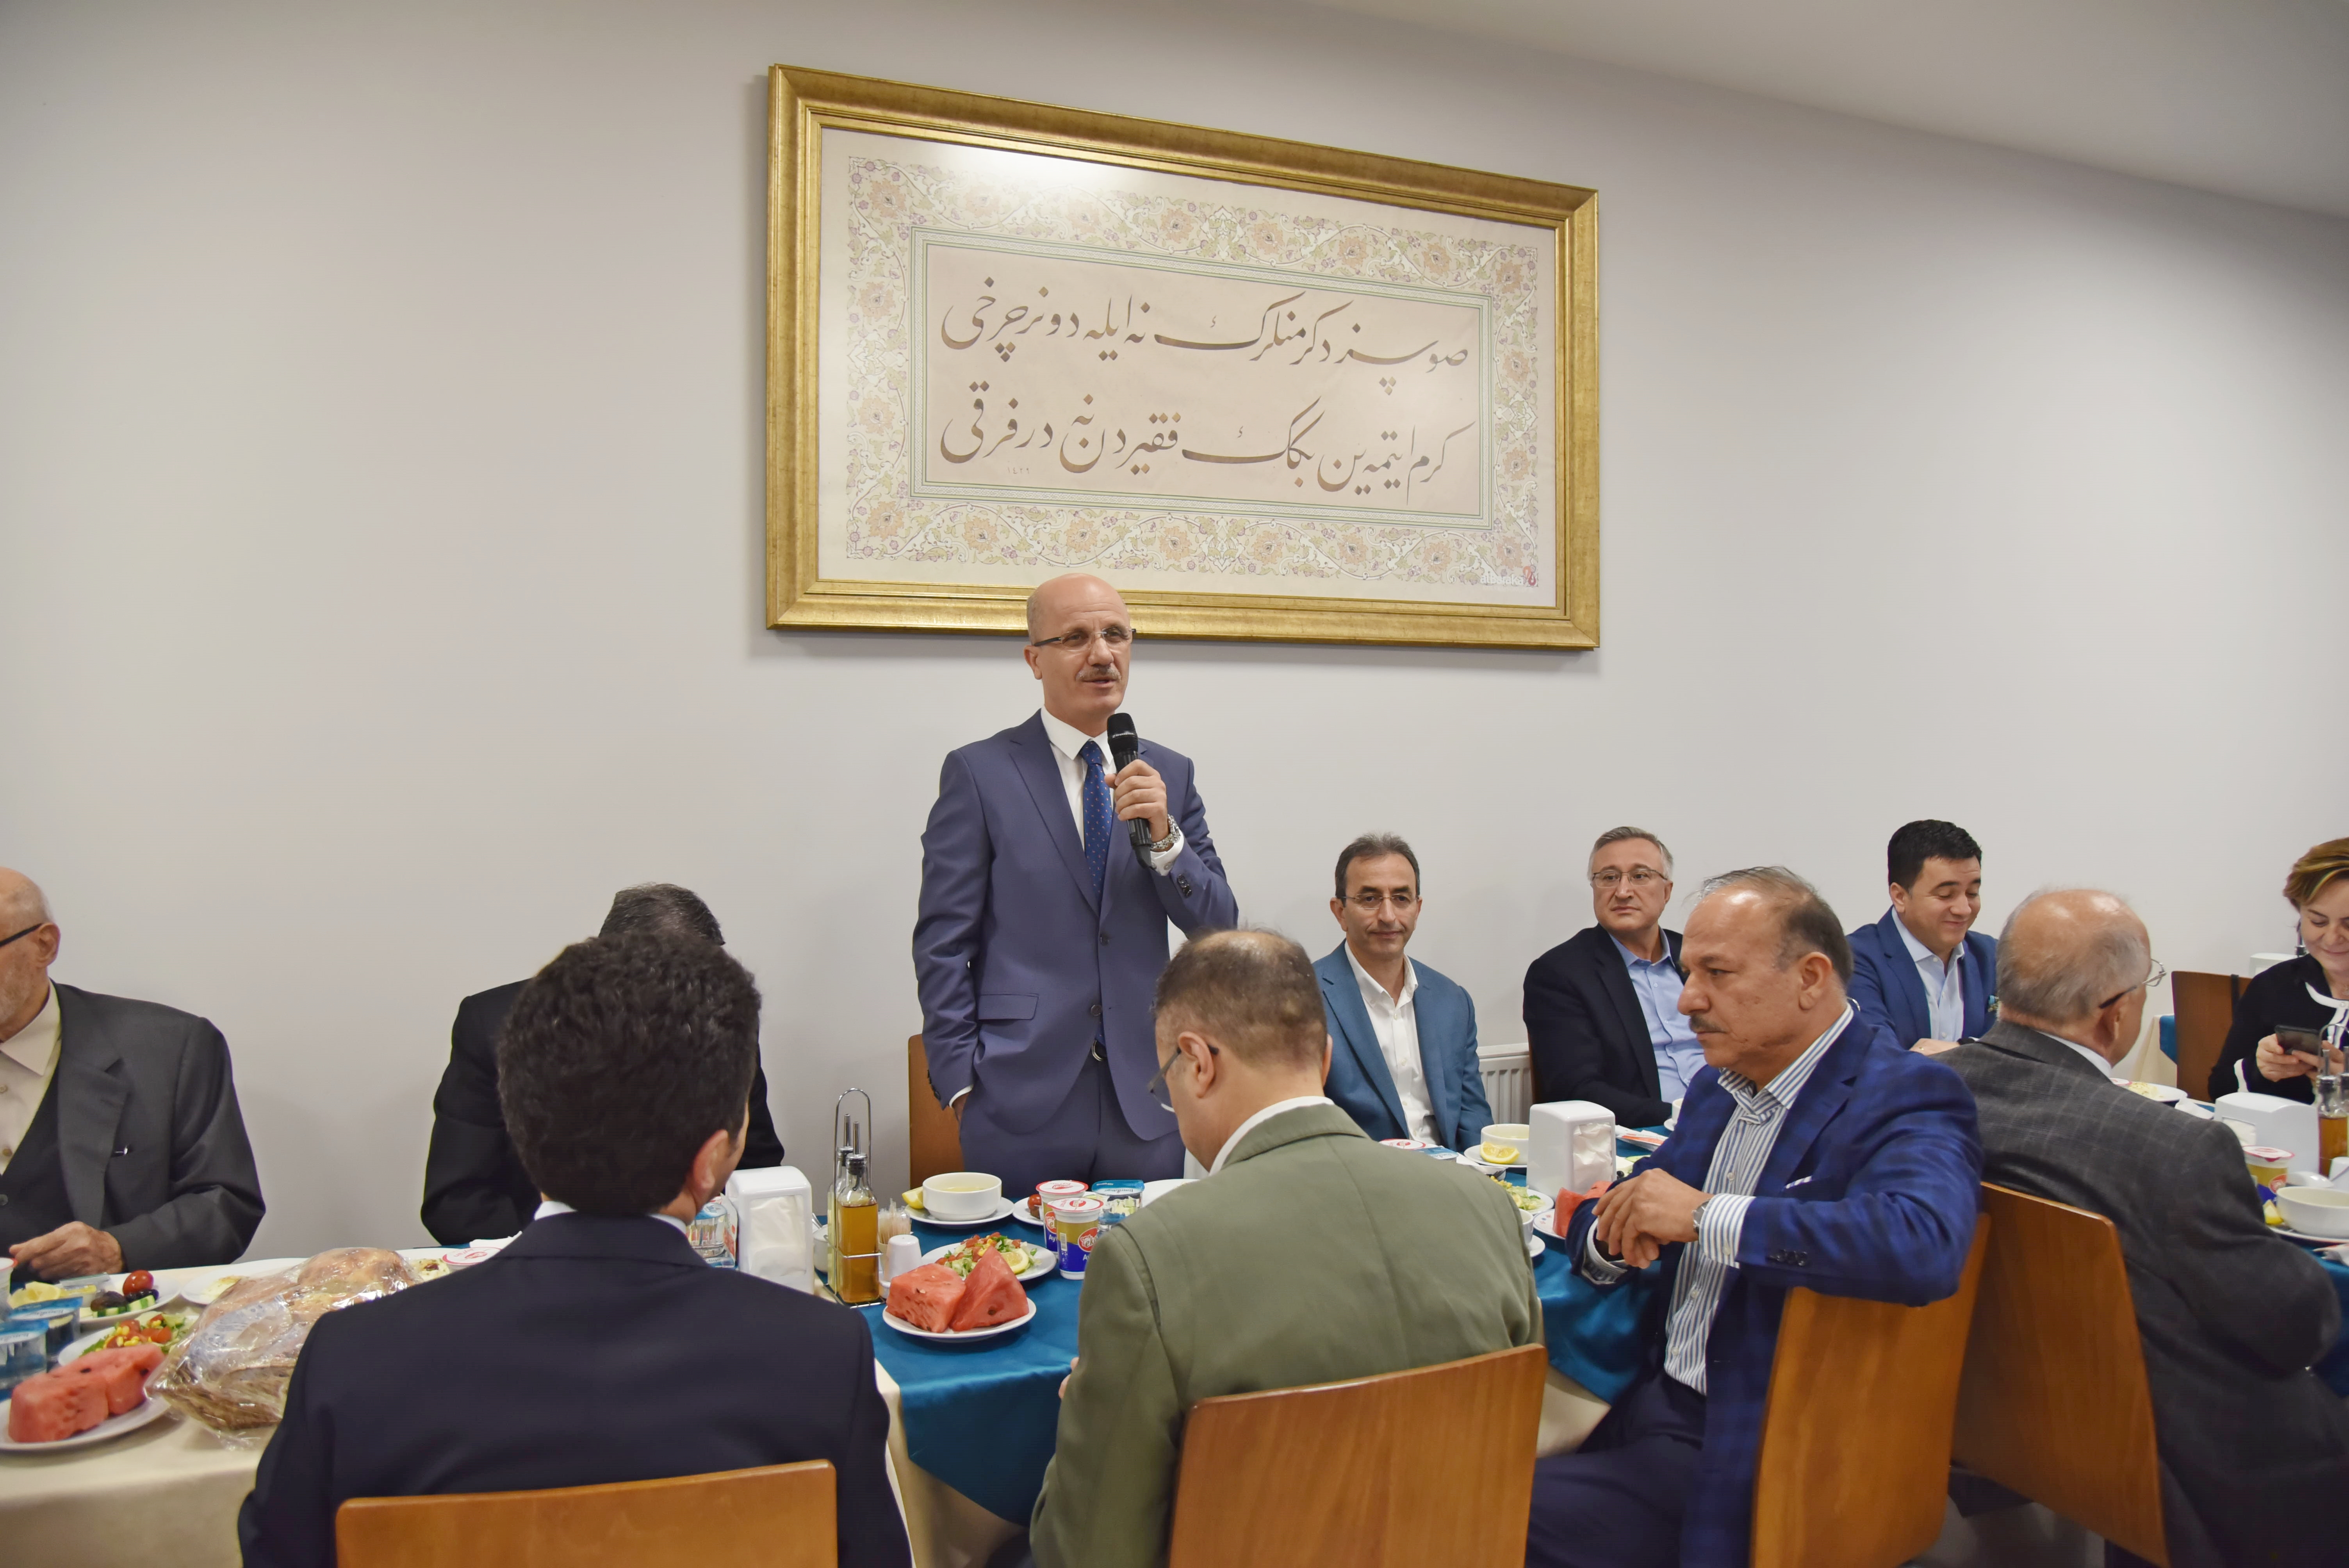 Marmara University's Traditional Iftar Was Held